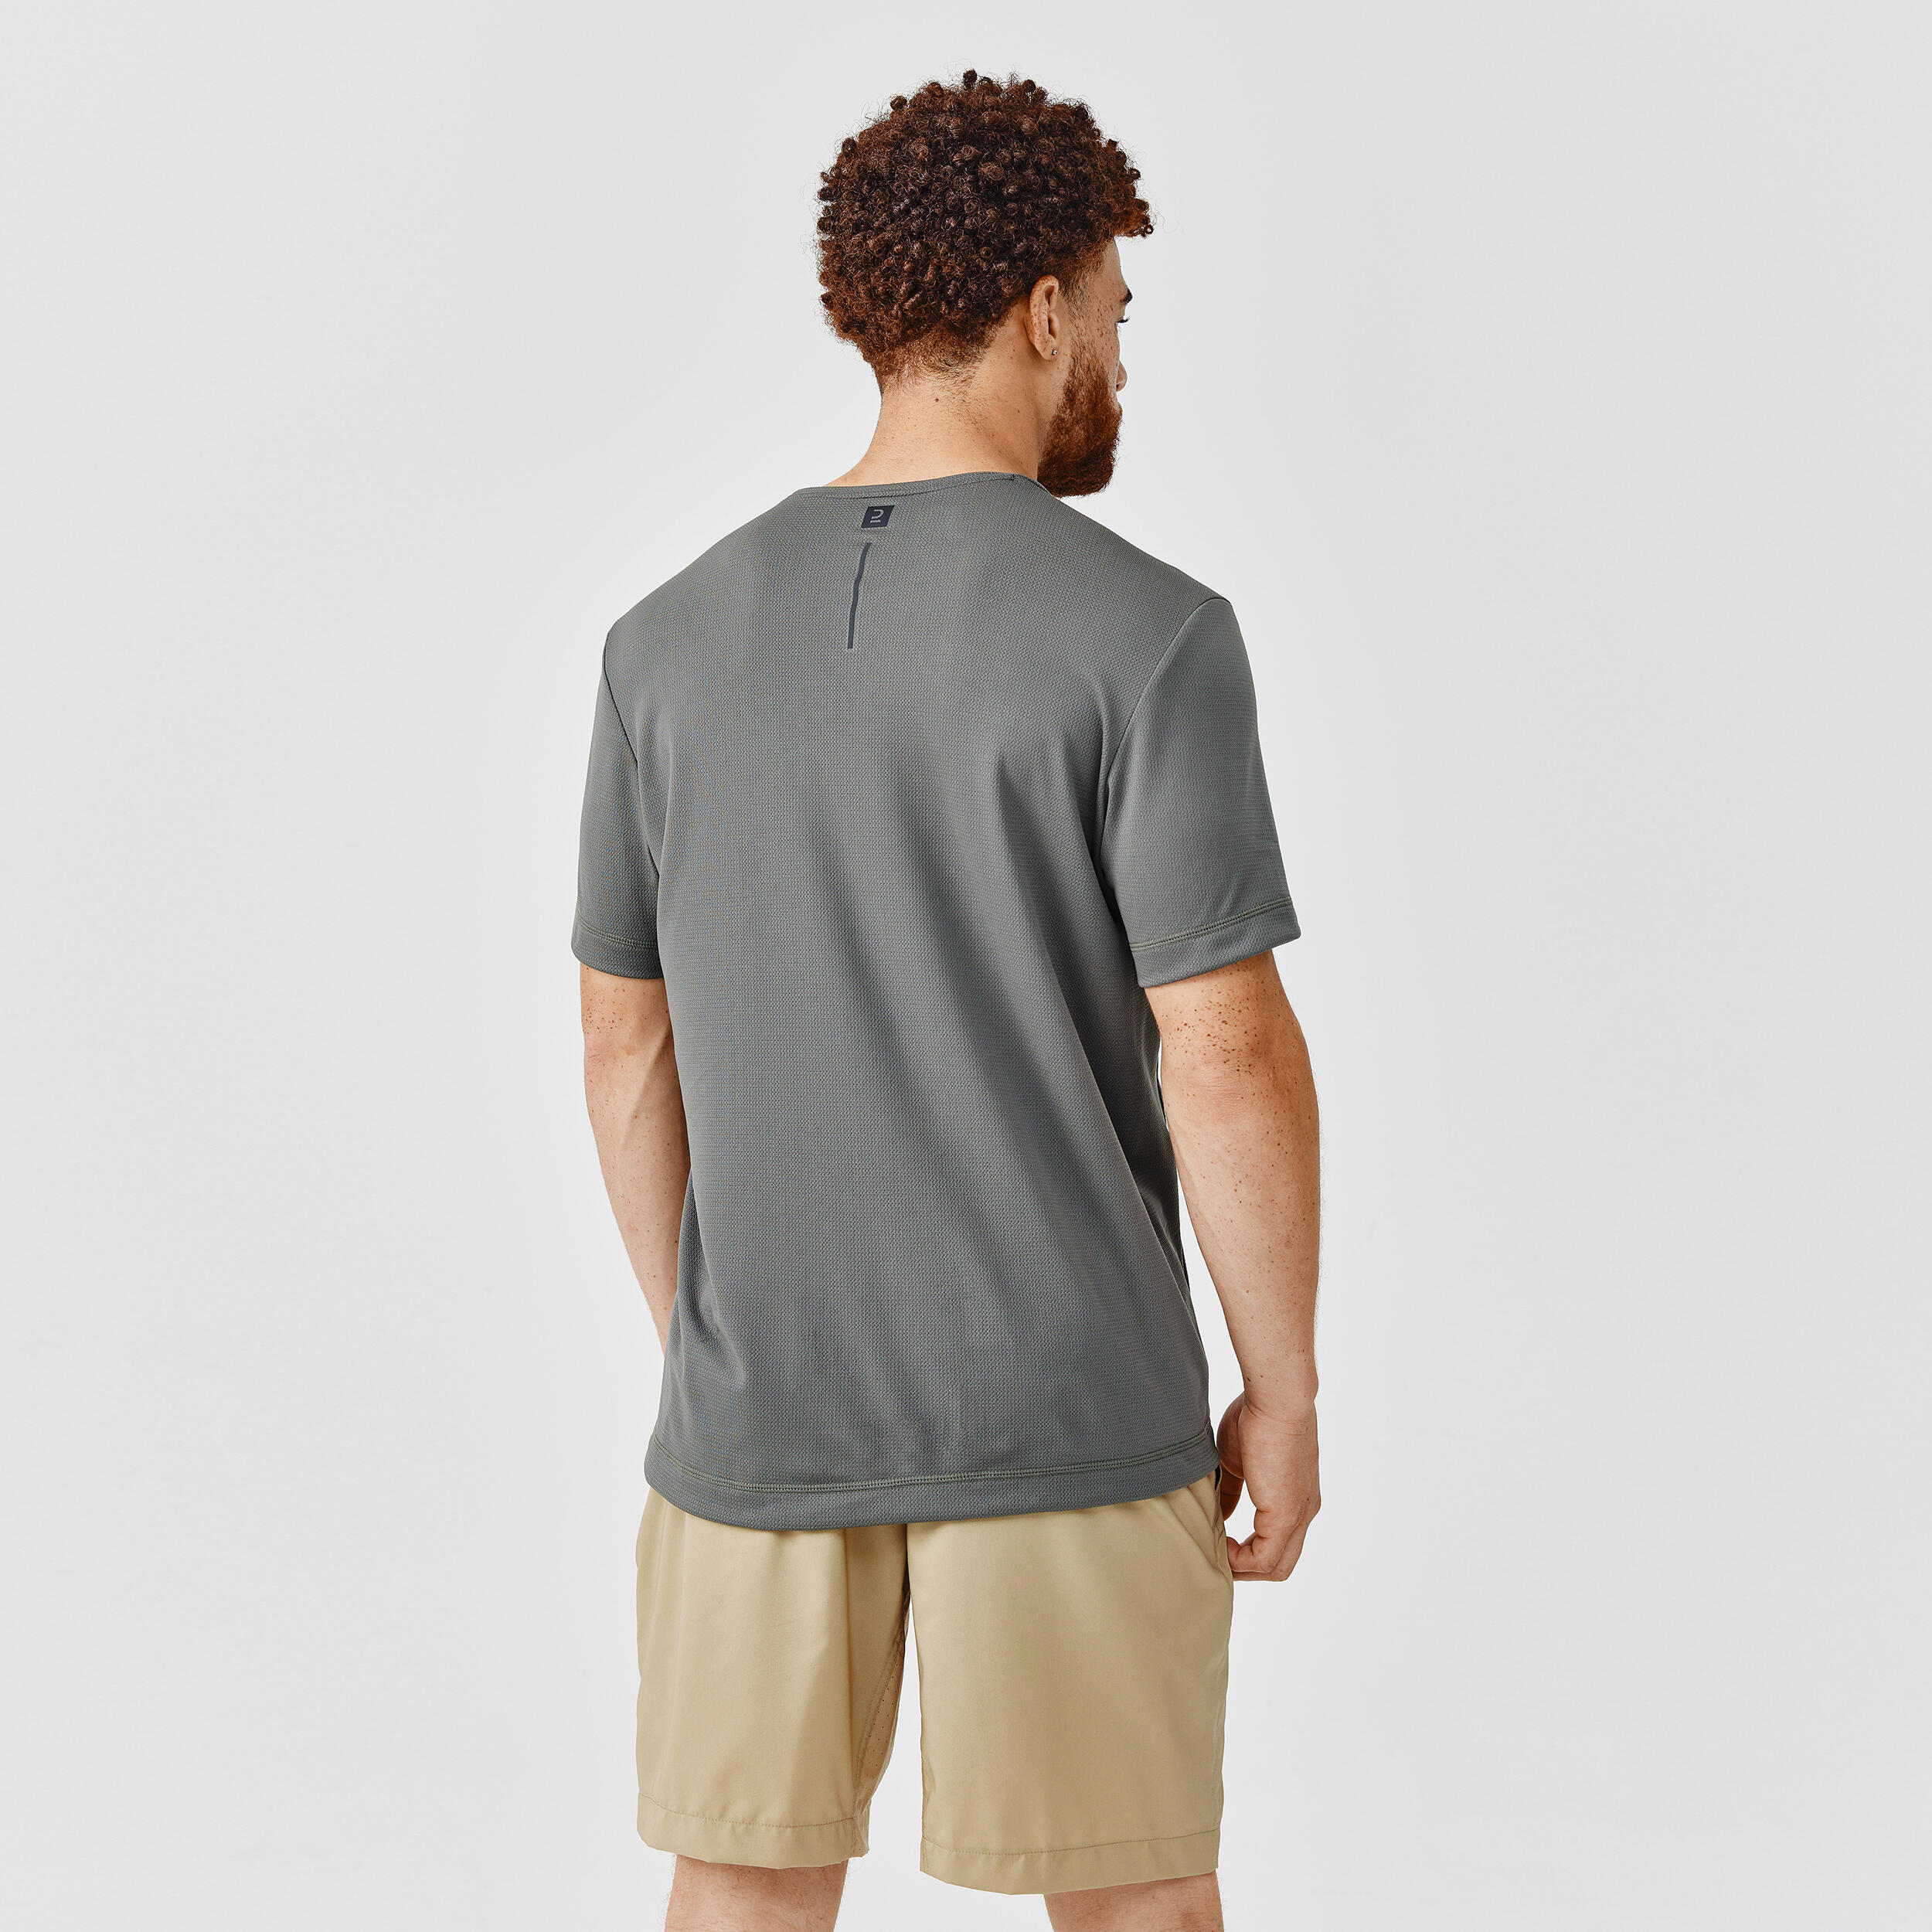 Dry Men's Breathable Running T-Shirt - Grey Khaki 3/8